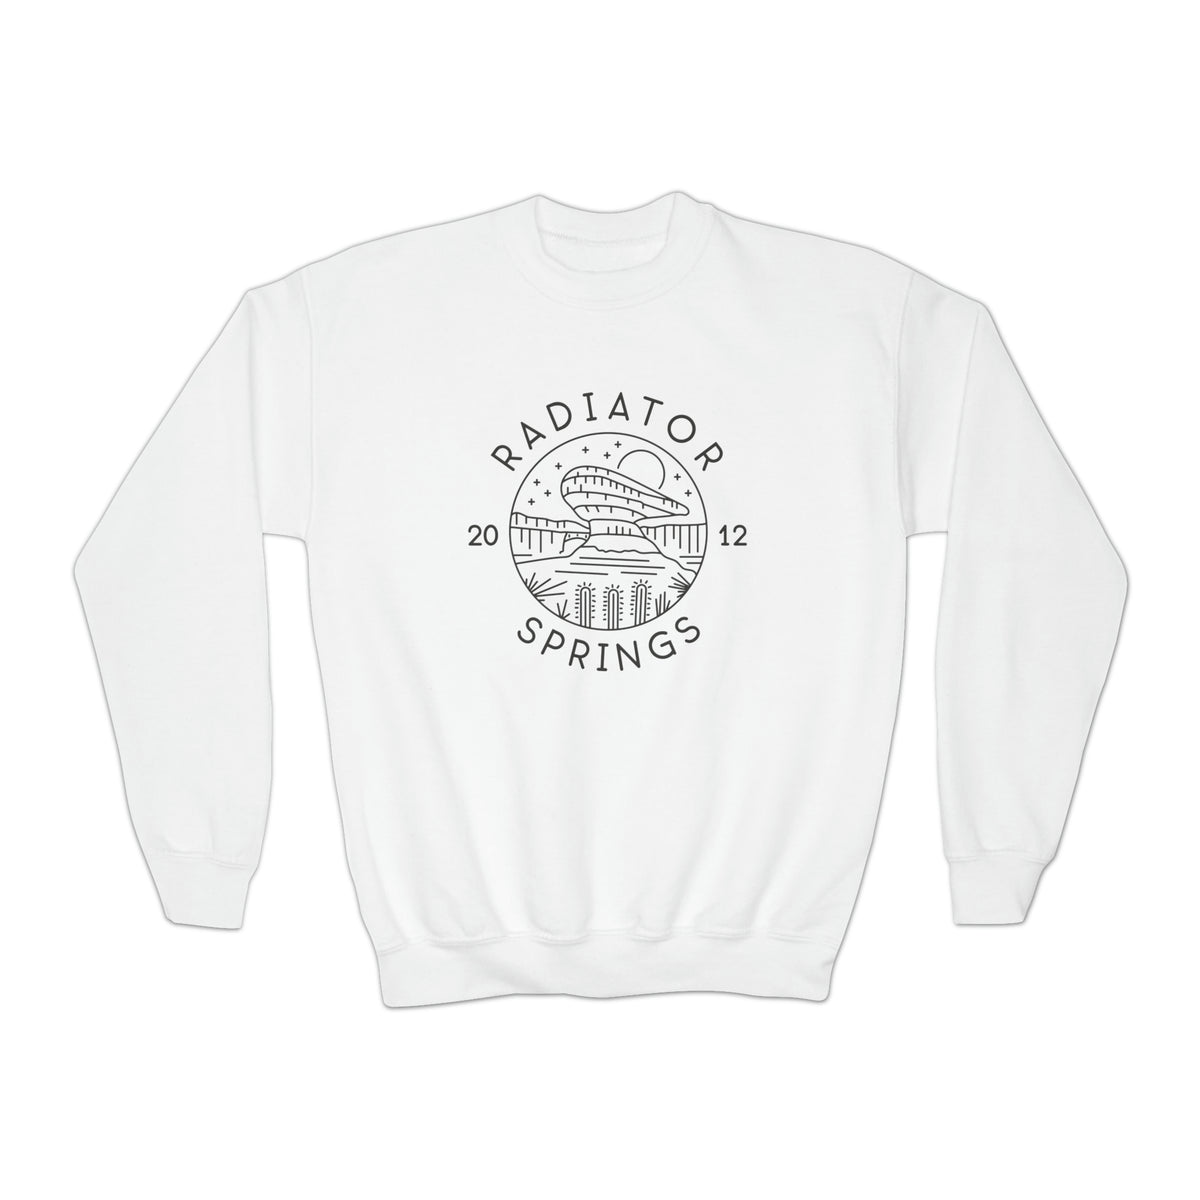 Radiator Springs Gildan Youth Crewneck Sweatshirt